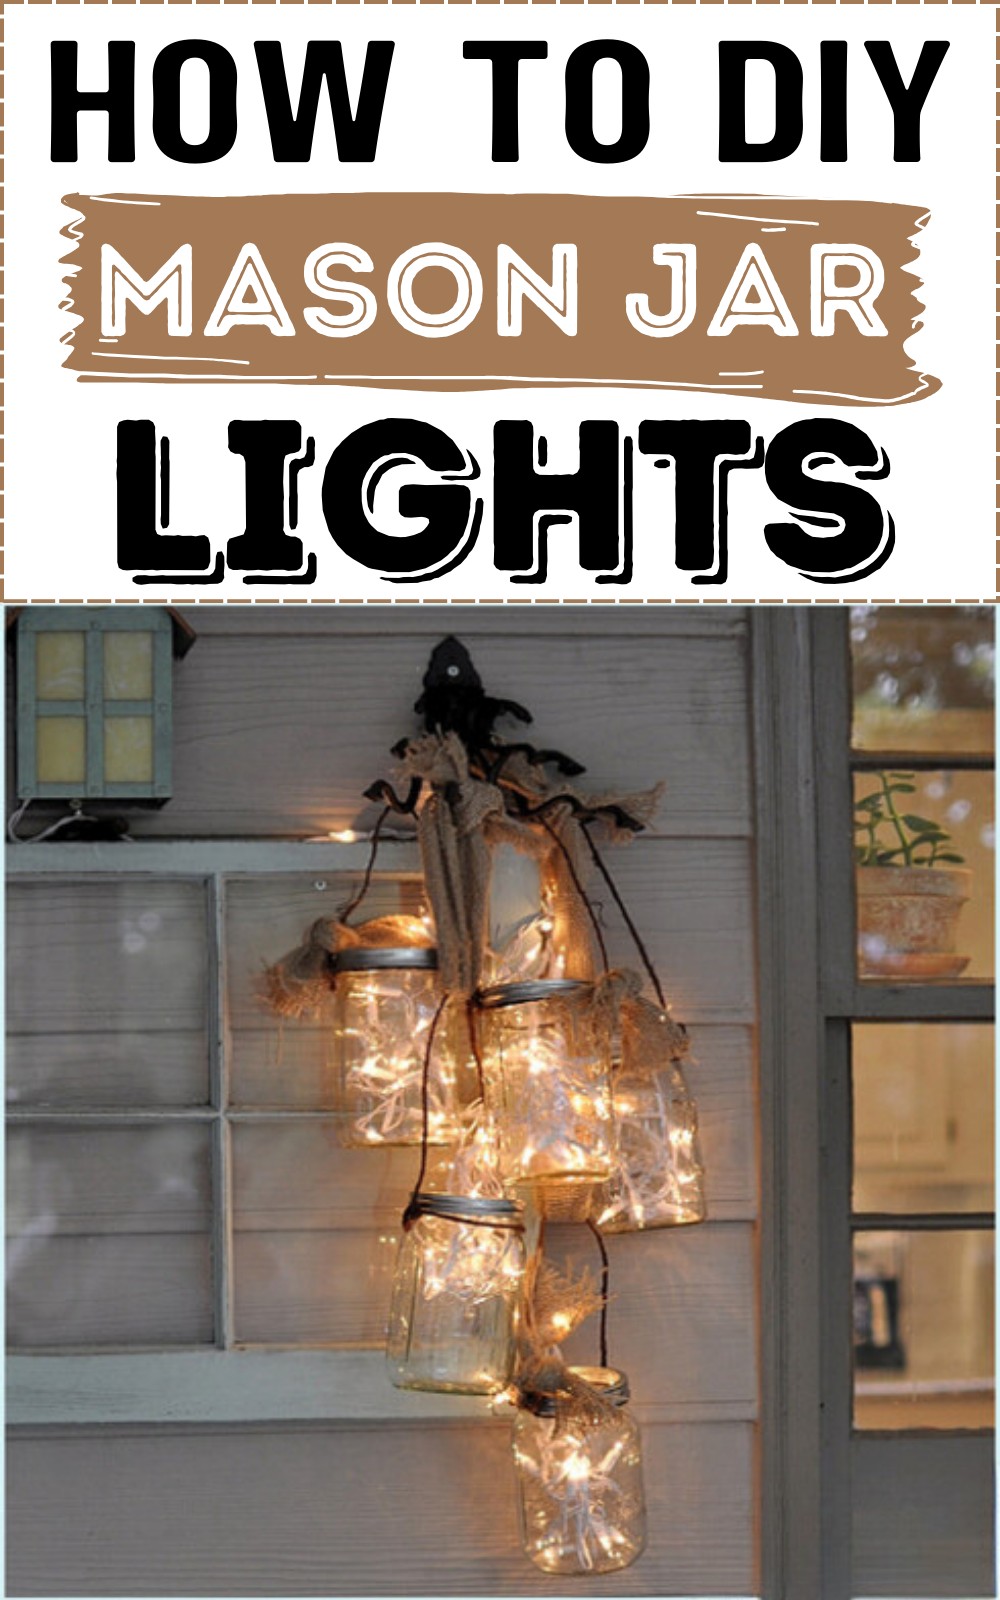 How to DIY Mason Jar Lights